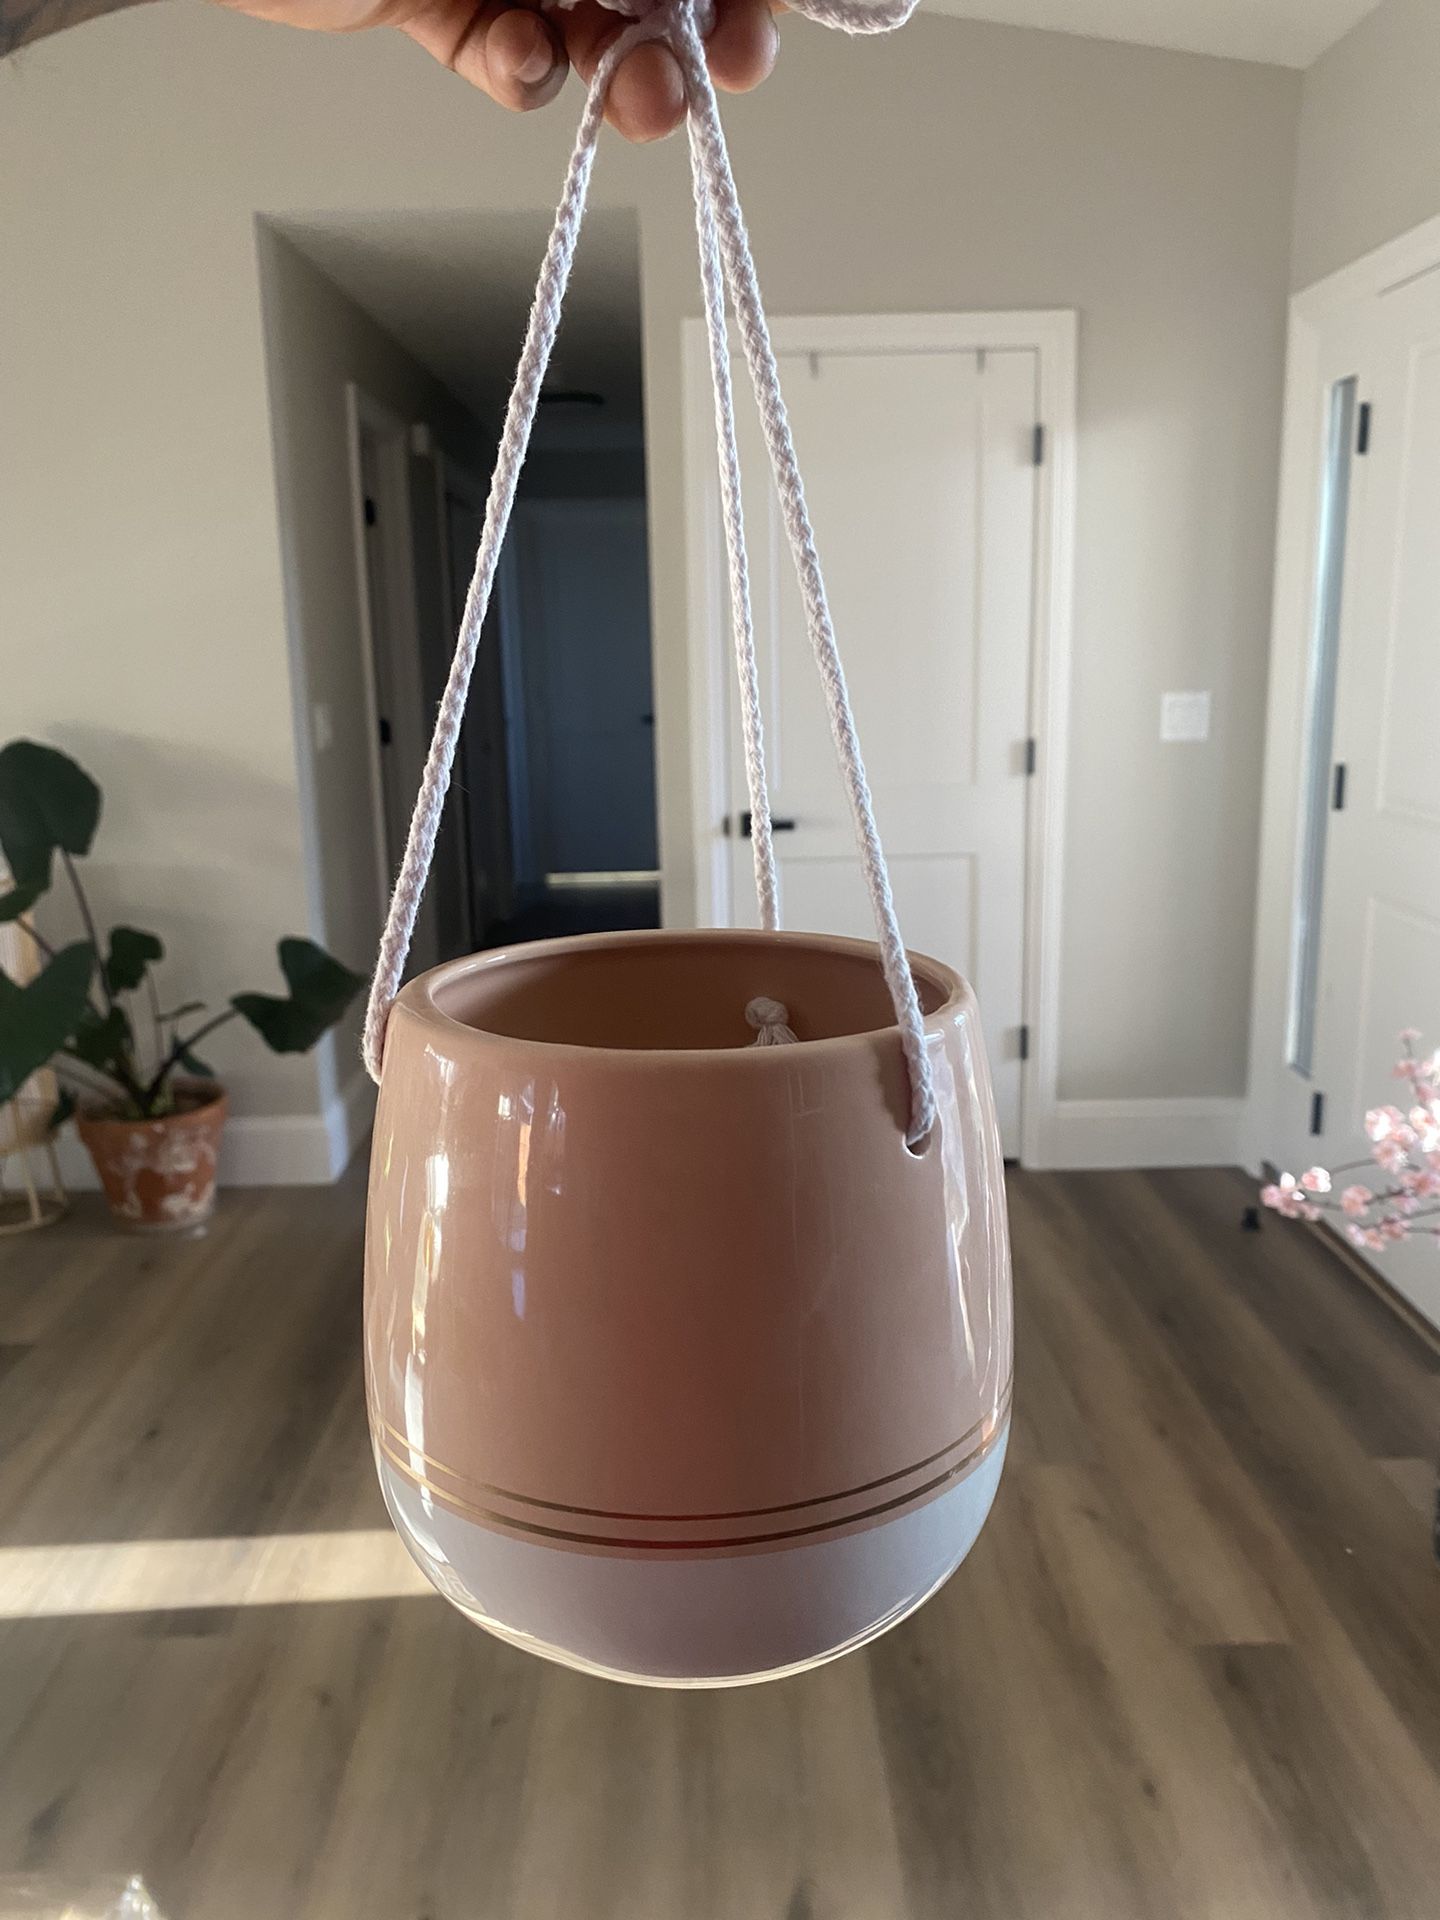 New Hanging planter Pot - 10 - Small